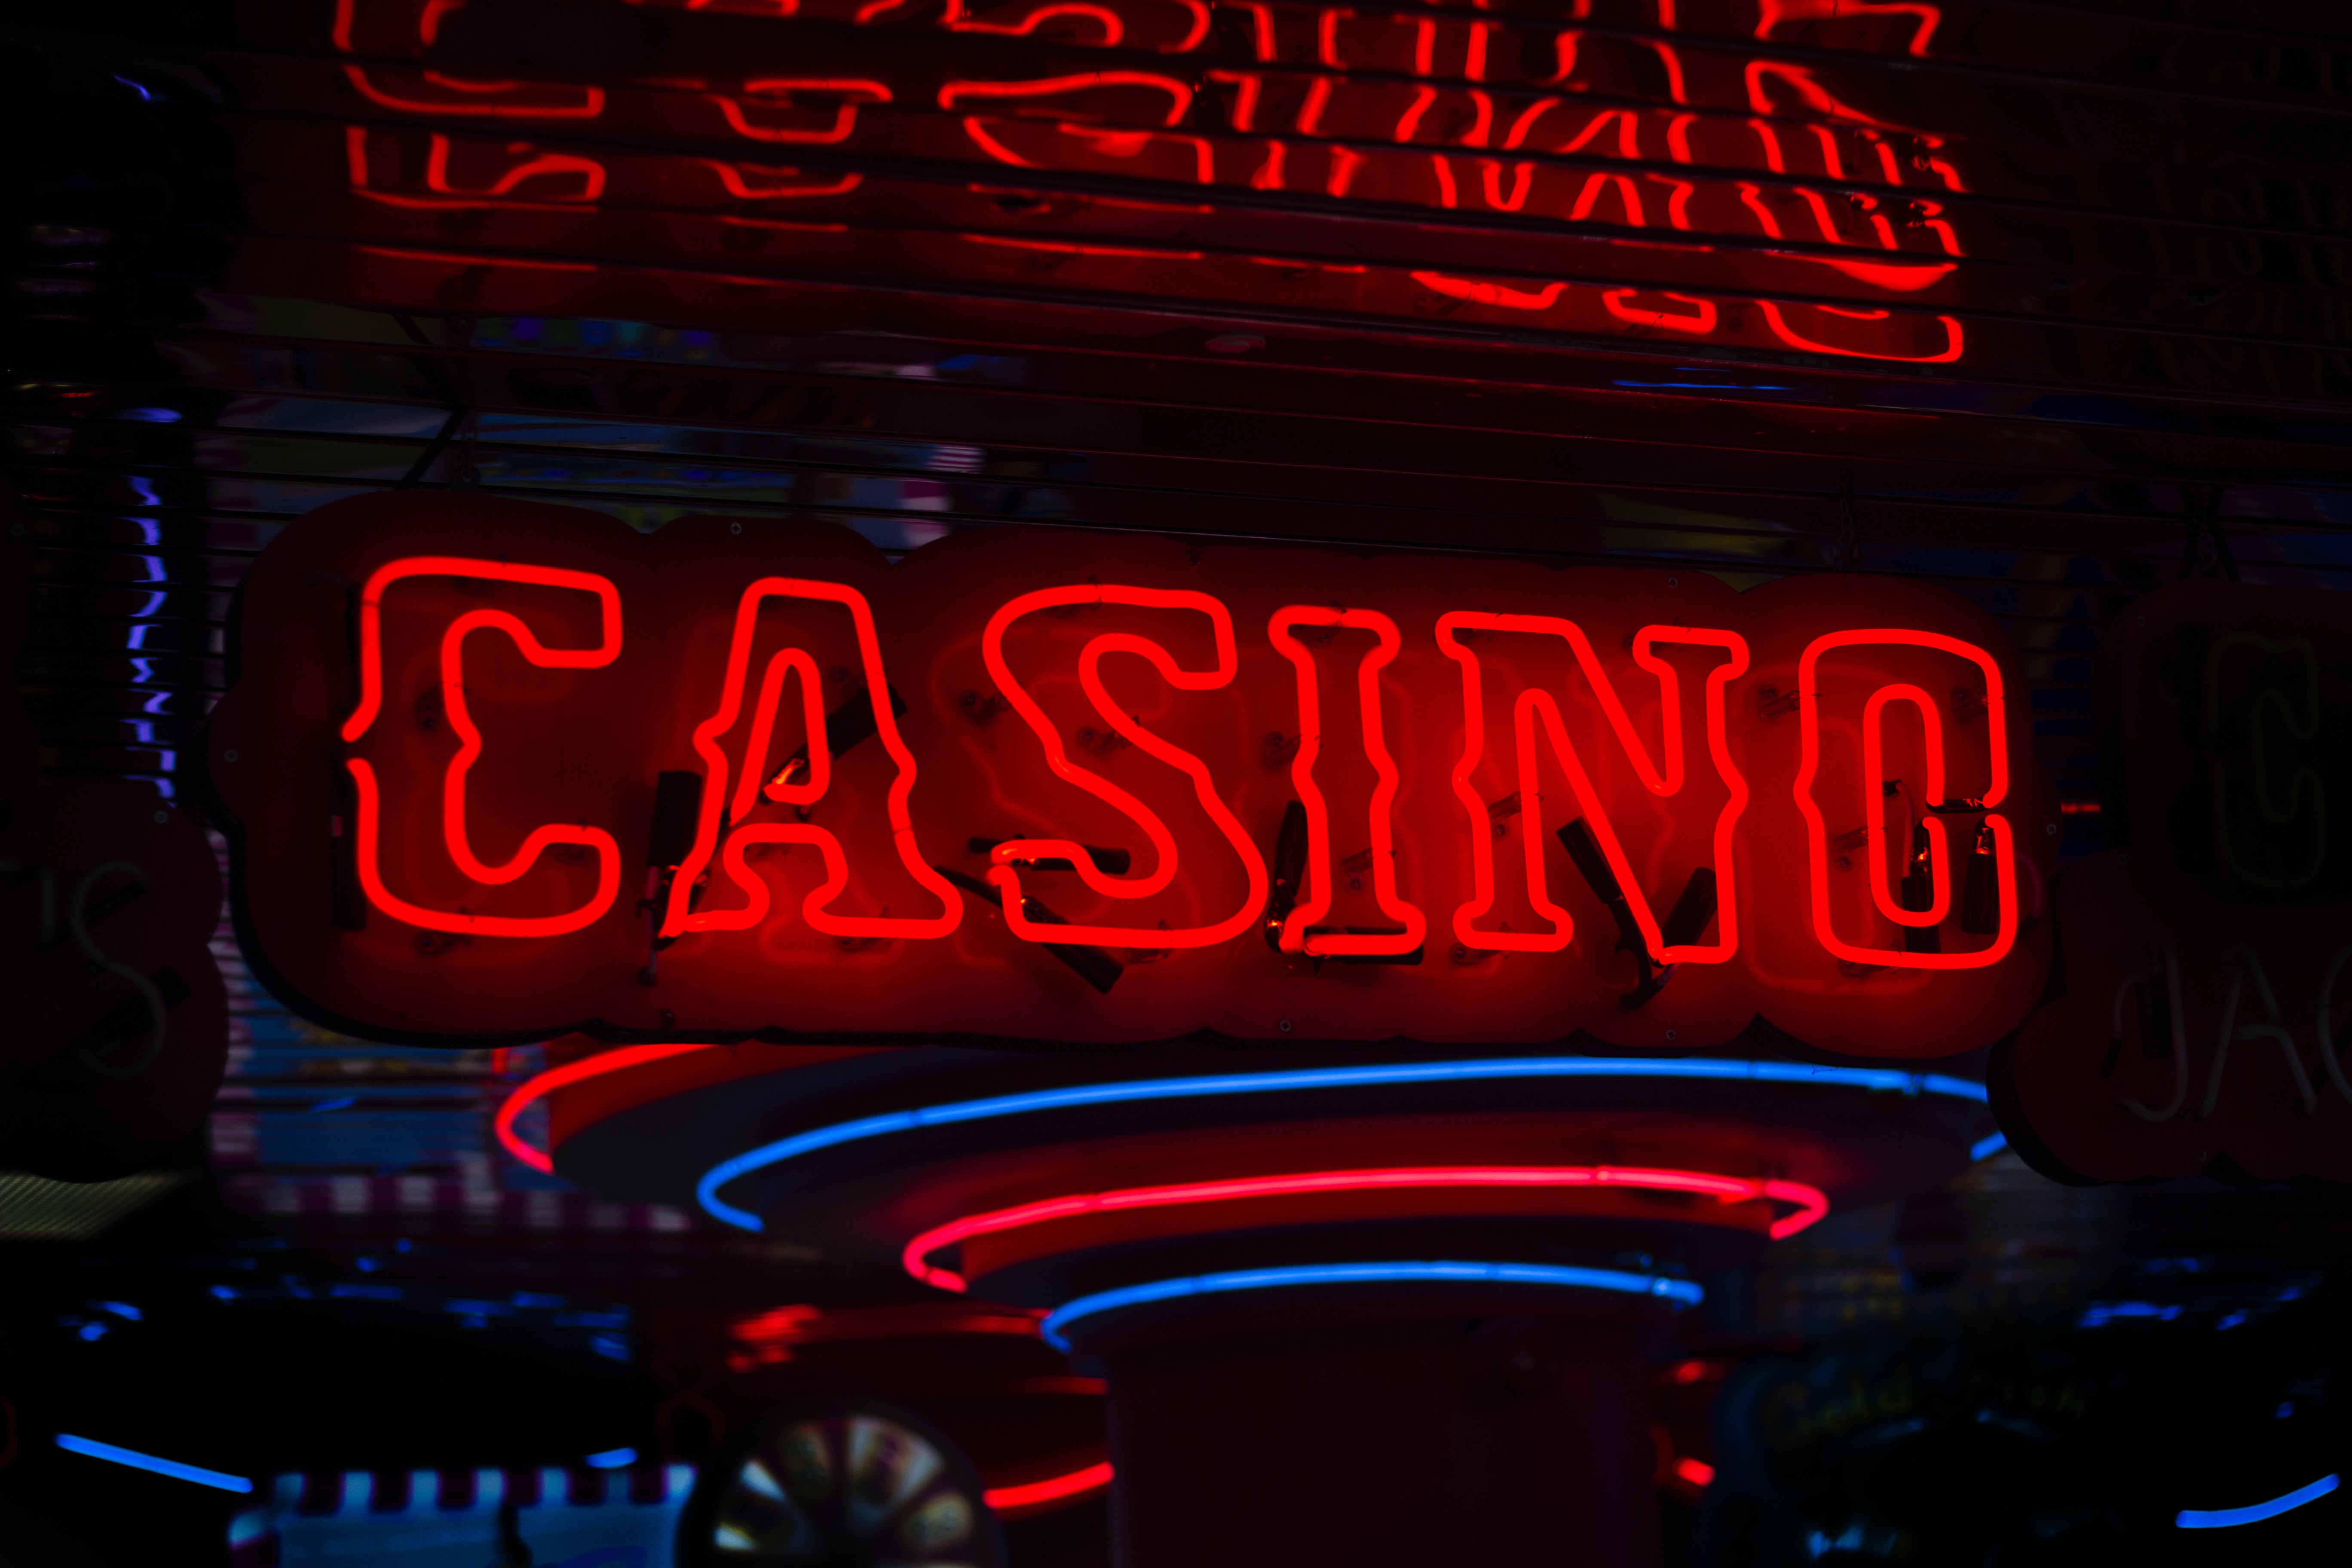 Red casino sign turned on; image by Ben Lambert, via Unsplash.com.